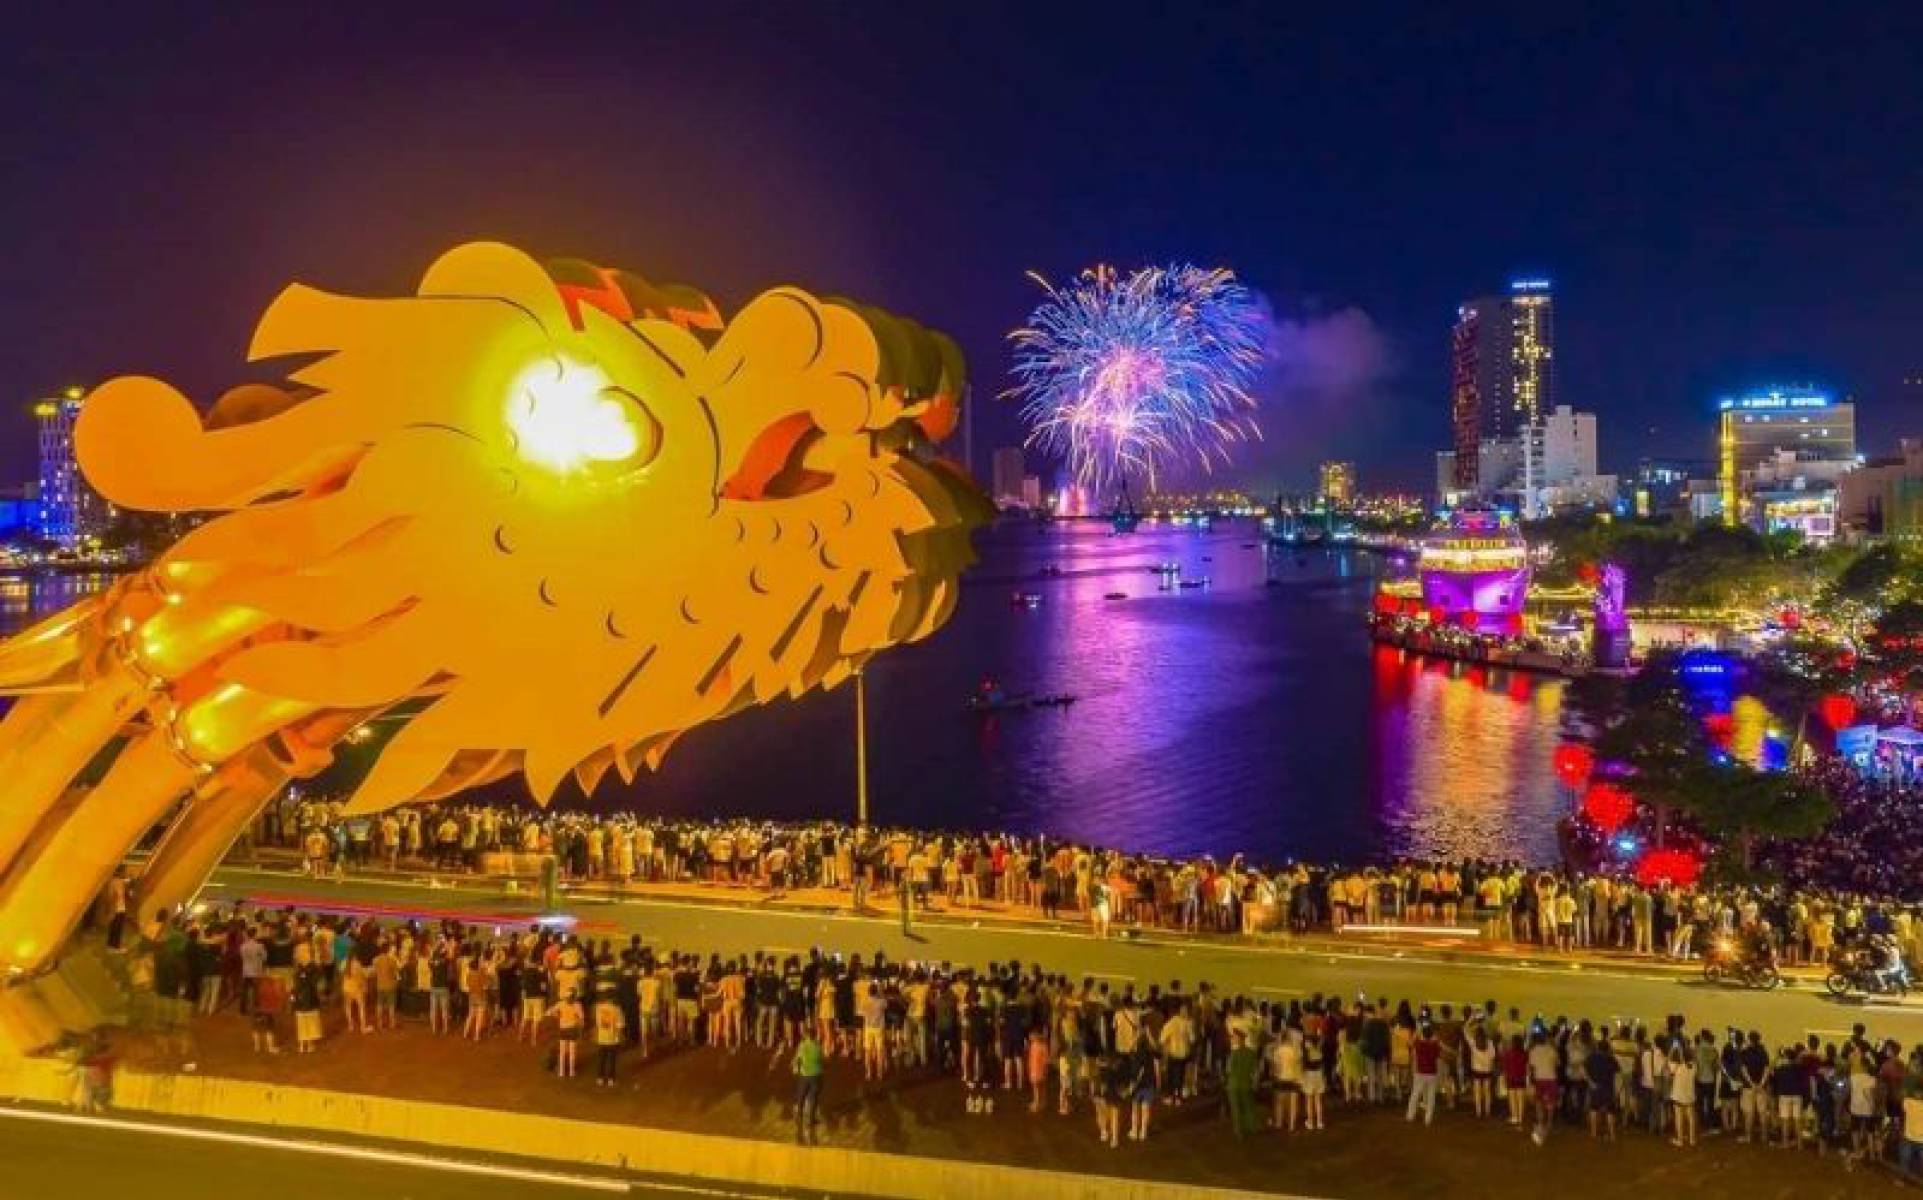 Danang International Fireworks Festival - A Feast of Light in the Sky